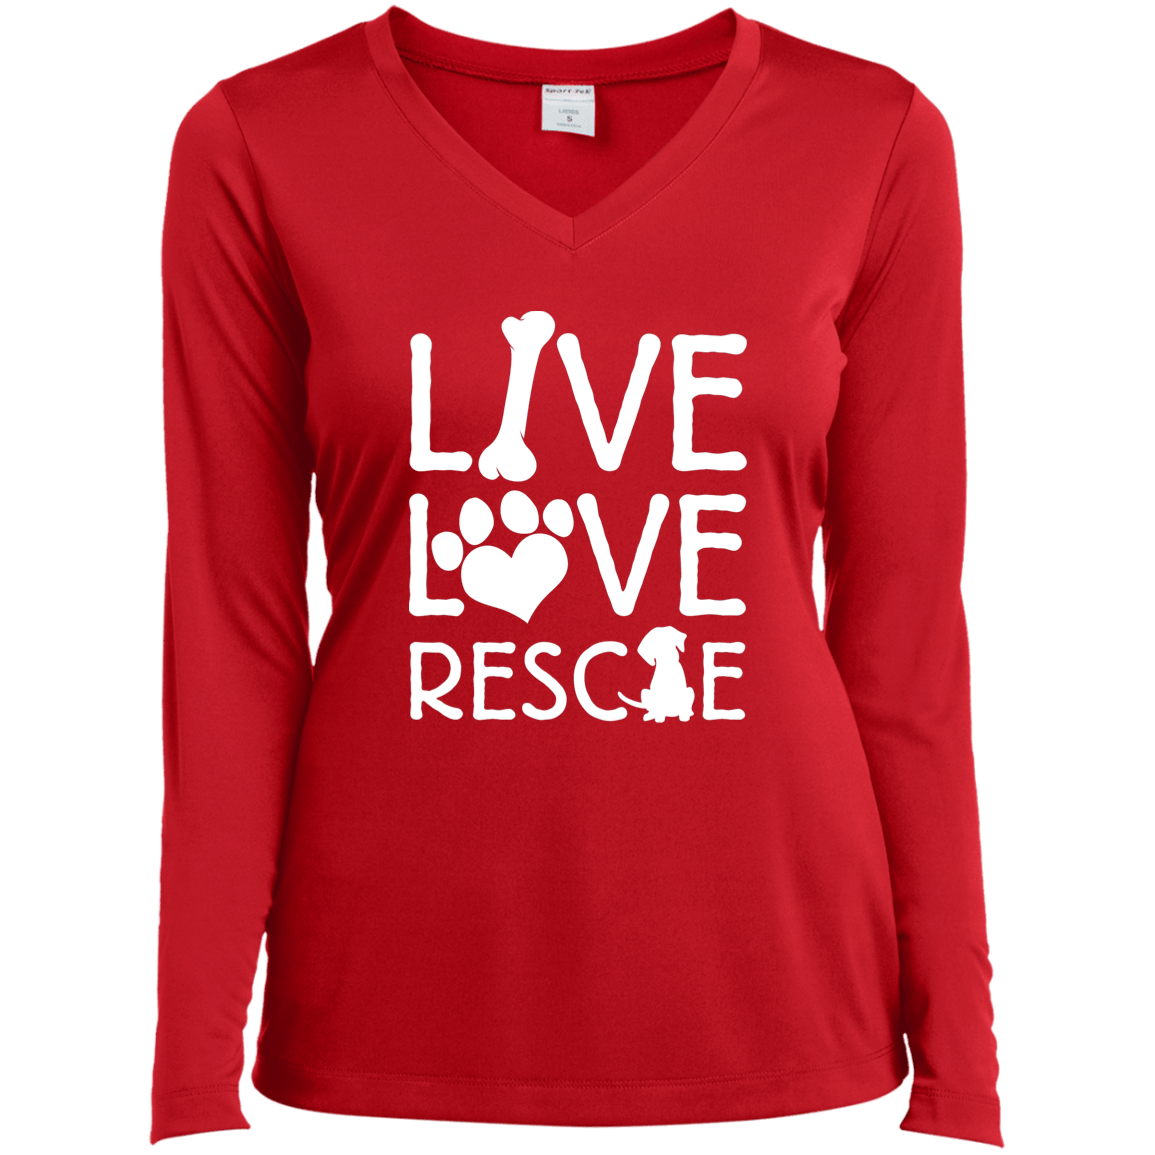 Live Love Rescue - Long Sleeve Ladies V Neck.